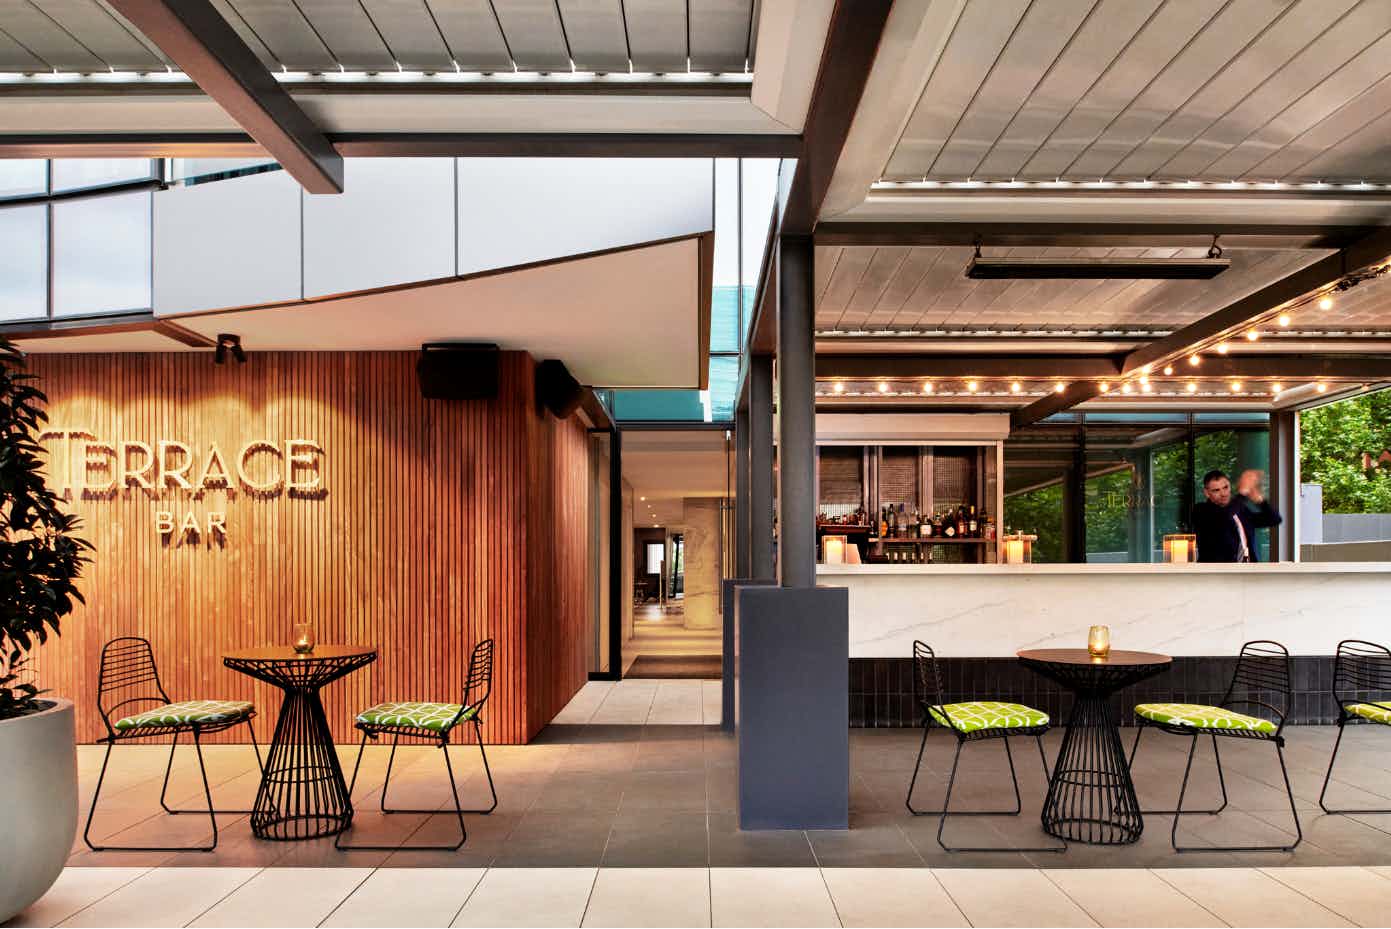 Terrace Bar, Sheraton Melbourne Hotel